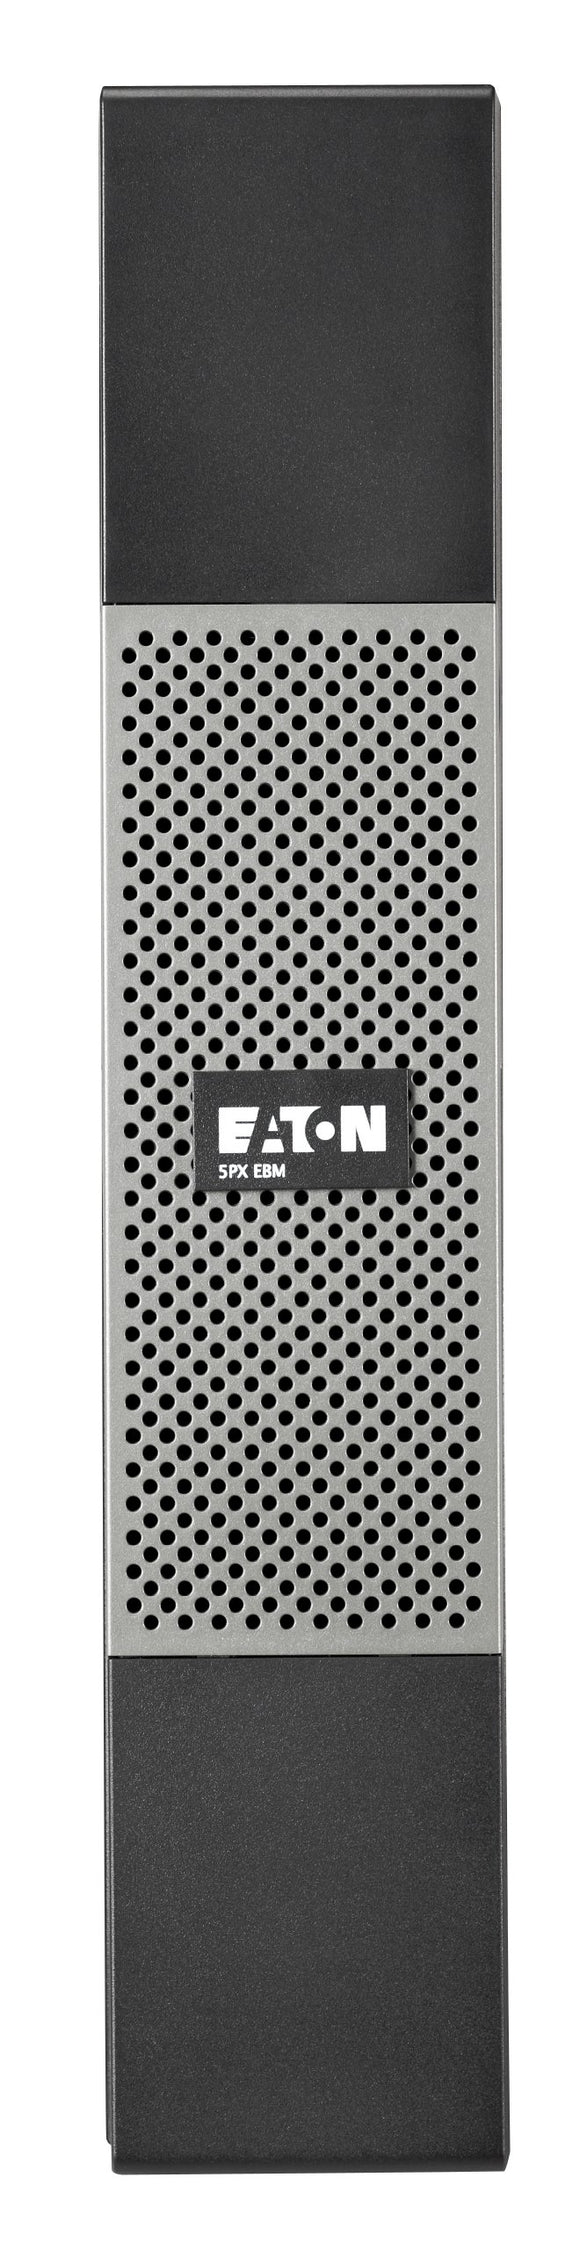 Eaton 5PX, EBM Computer Surge Protector, (5PXEBM48RT)